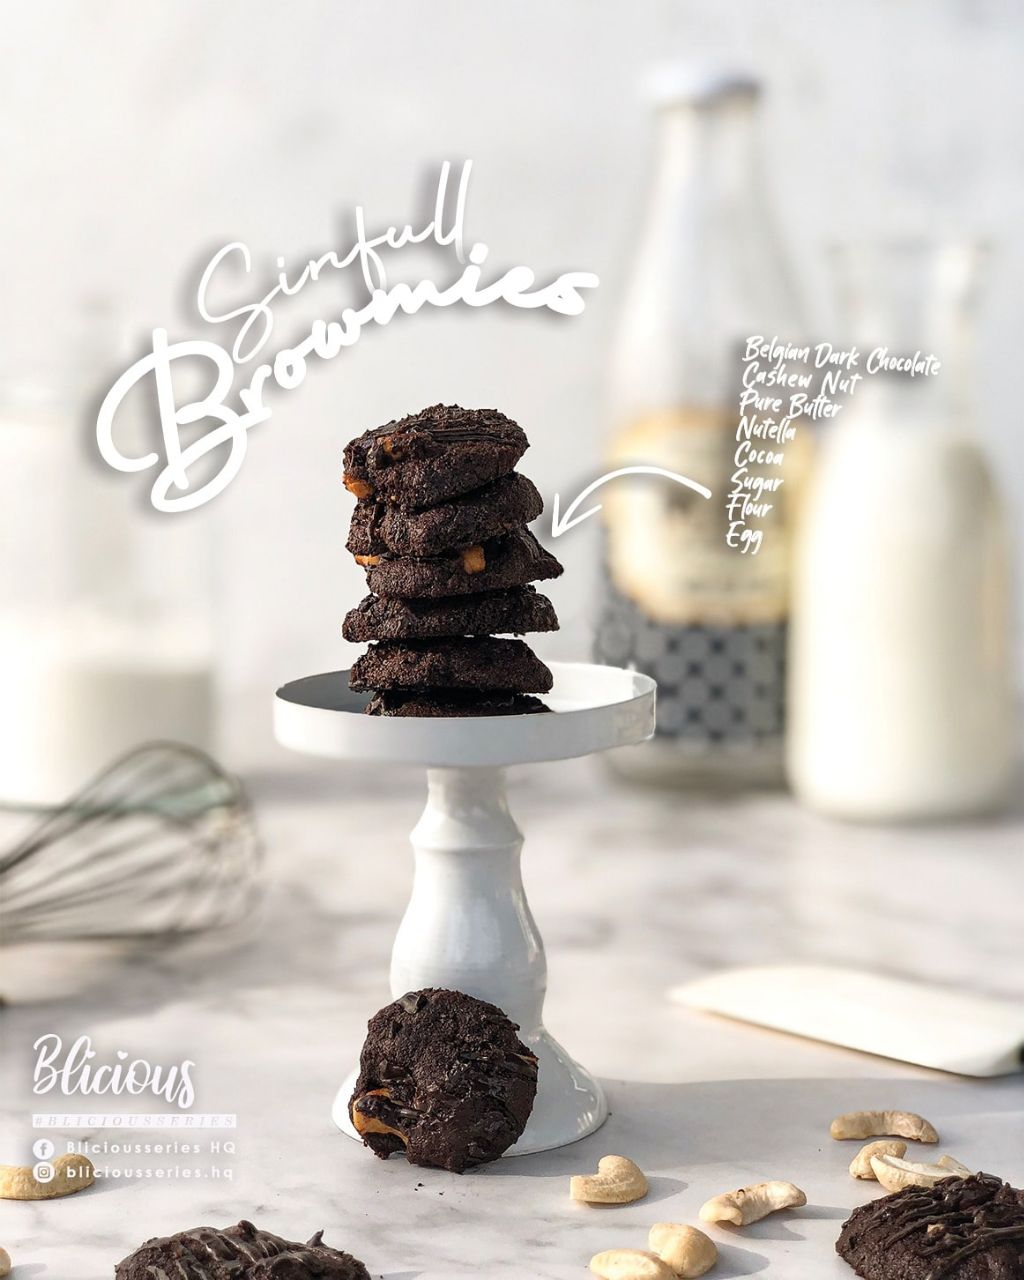 #BliciousSeries Sinful Brownies Cookies